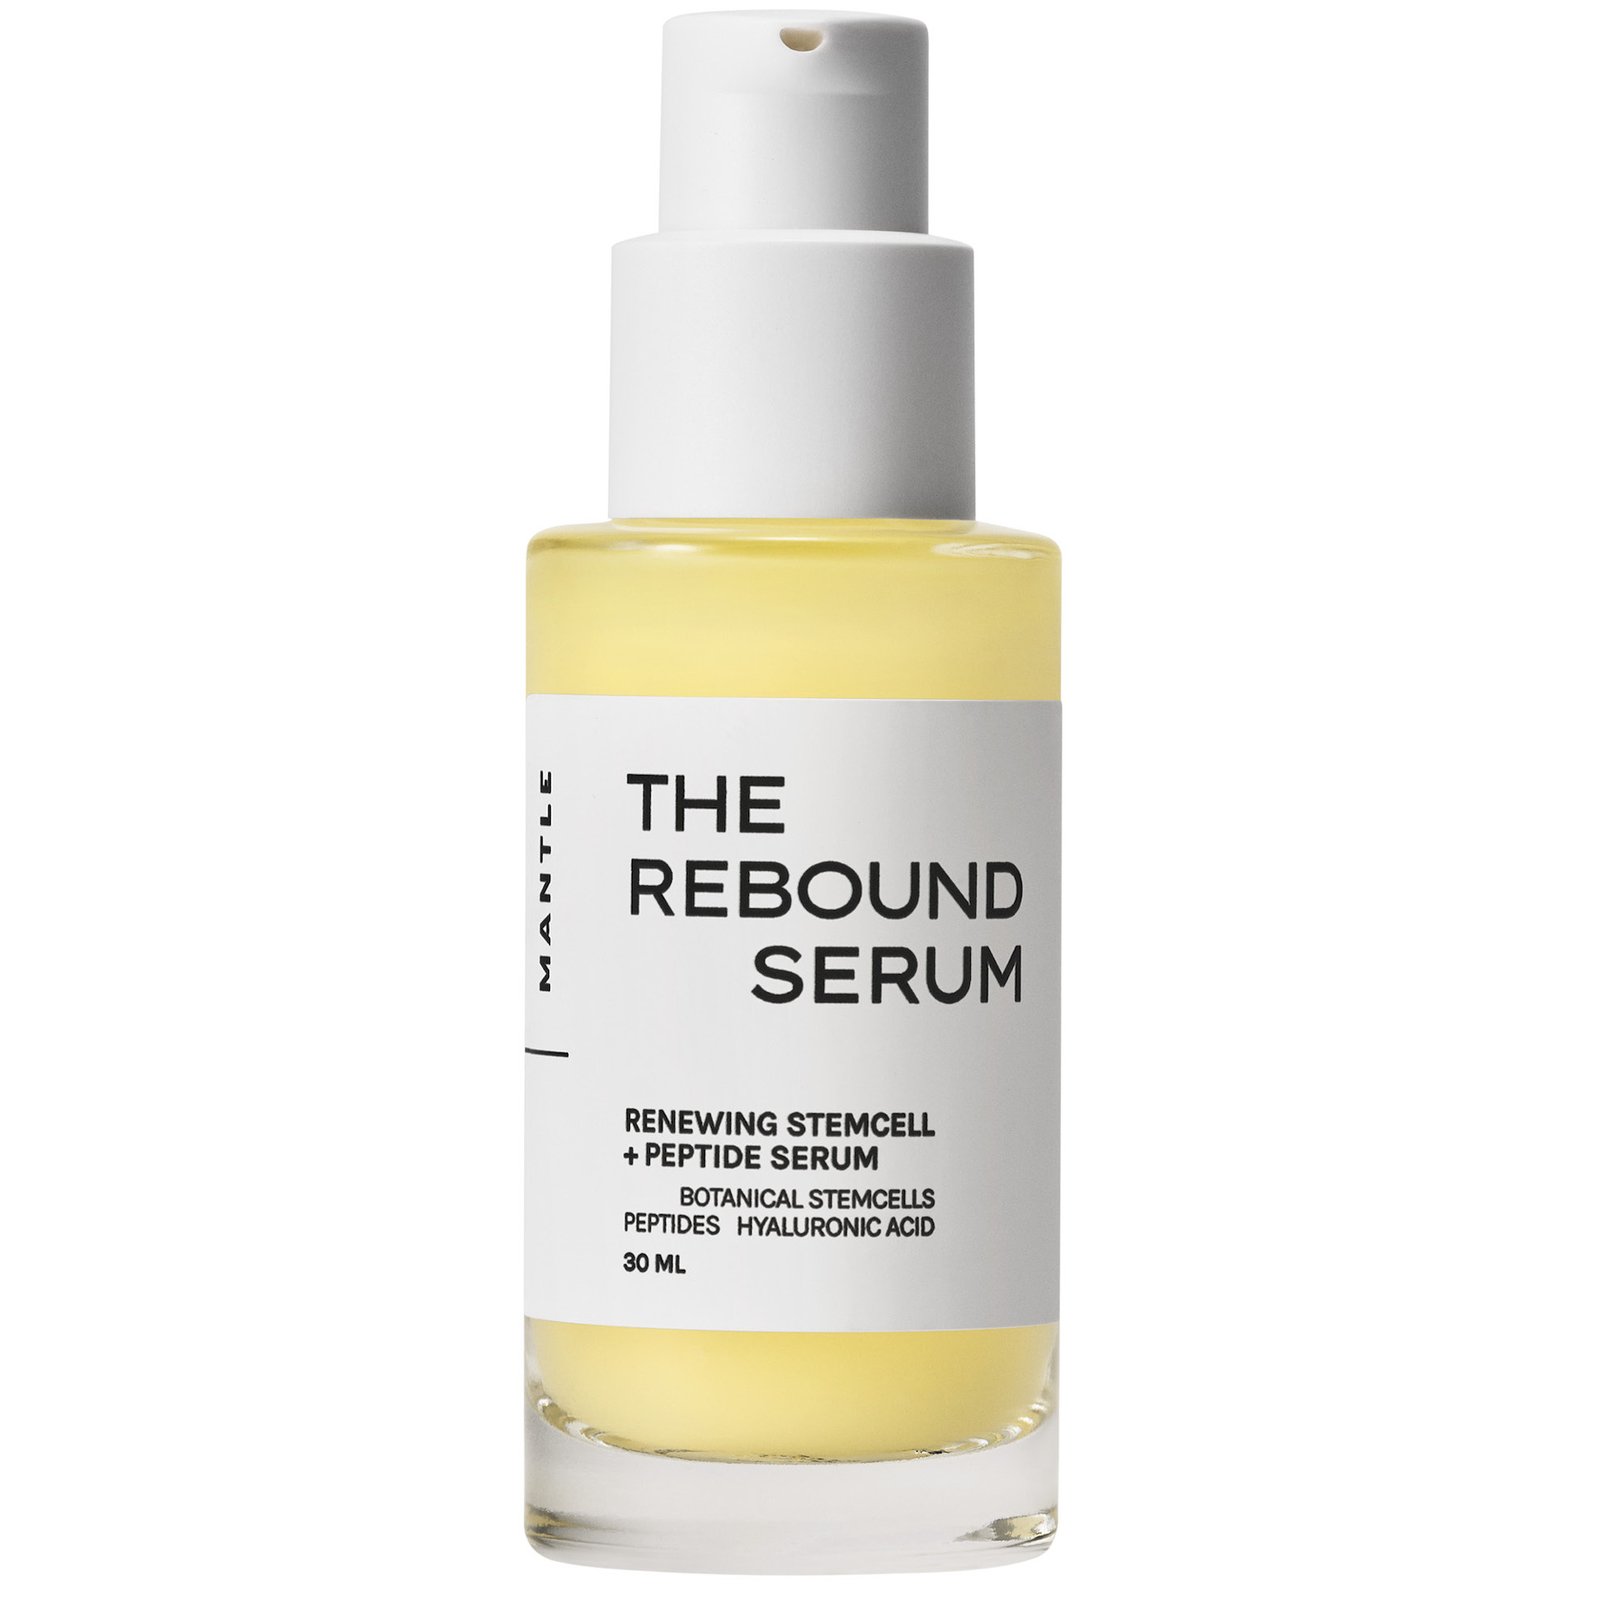 MANTLE The Rebound Serum – Renewing stem cell + peptide serum 30 ml